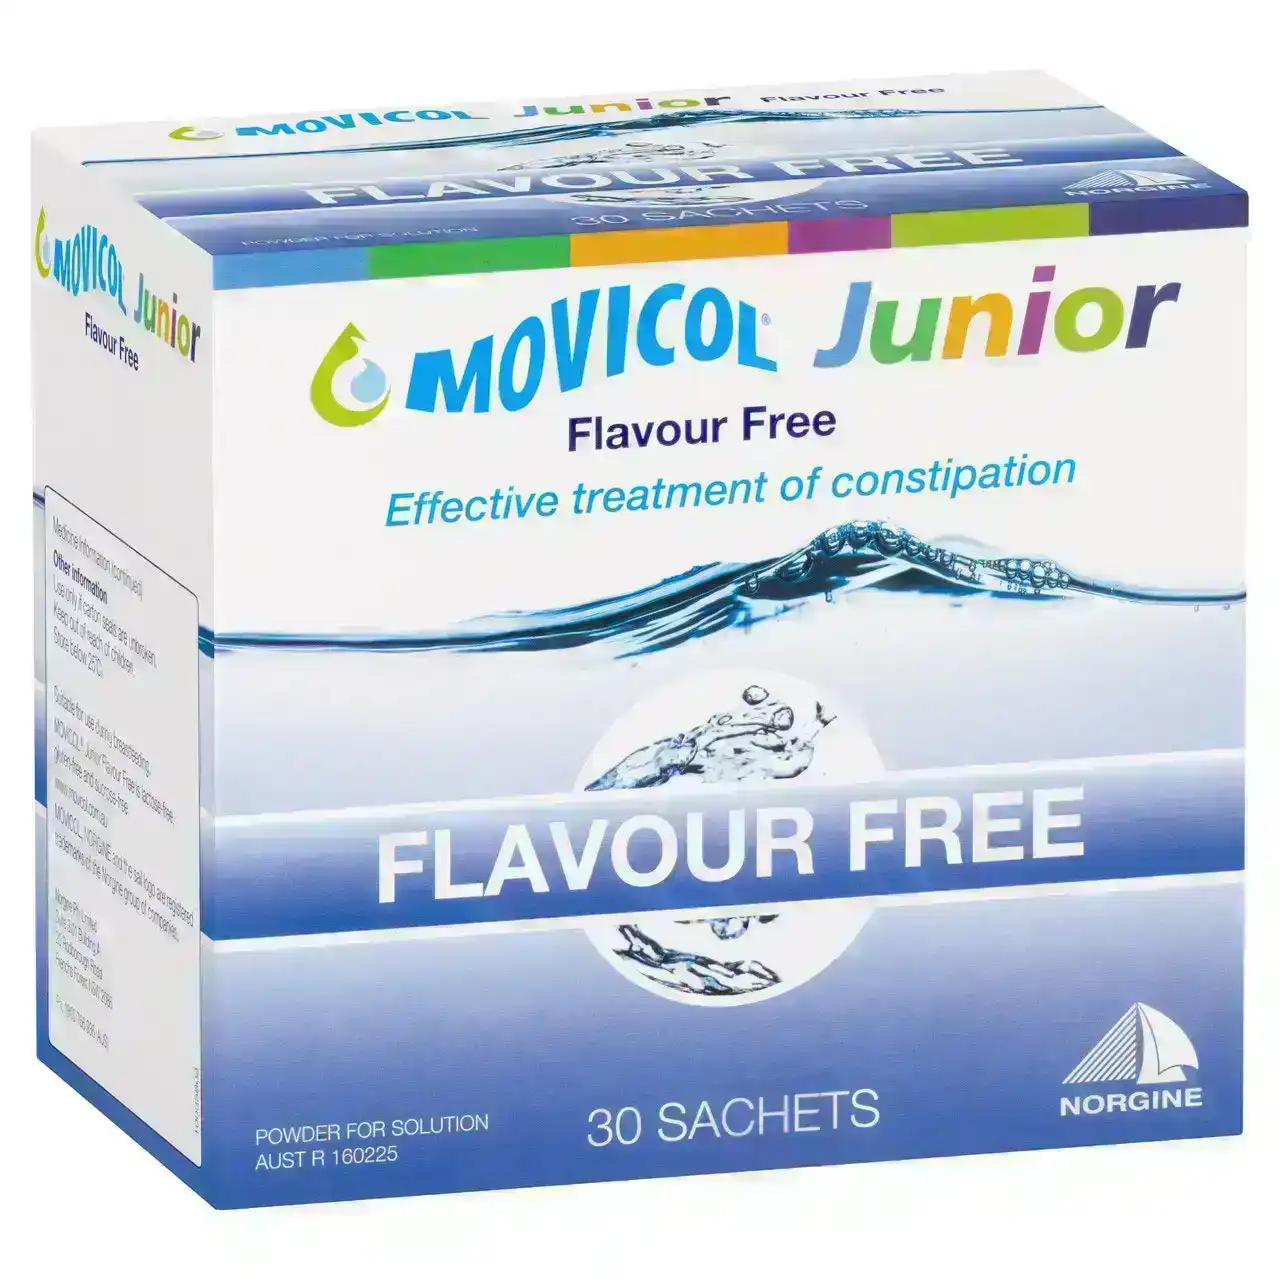 MOVICOL(r) Junior Flavour Free